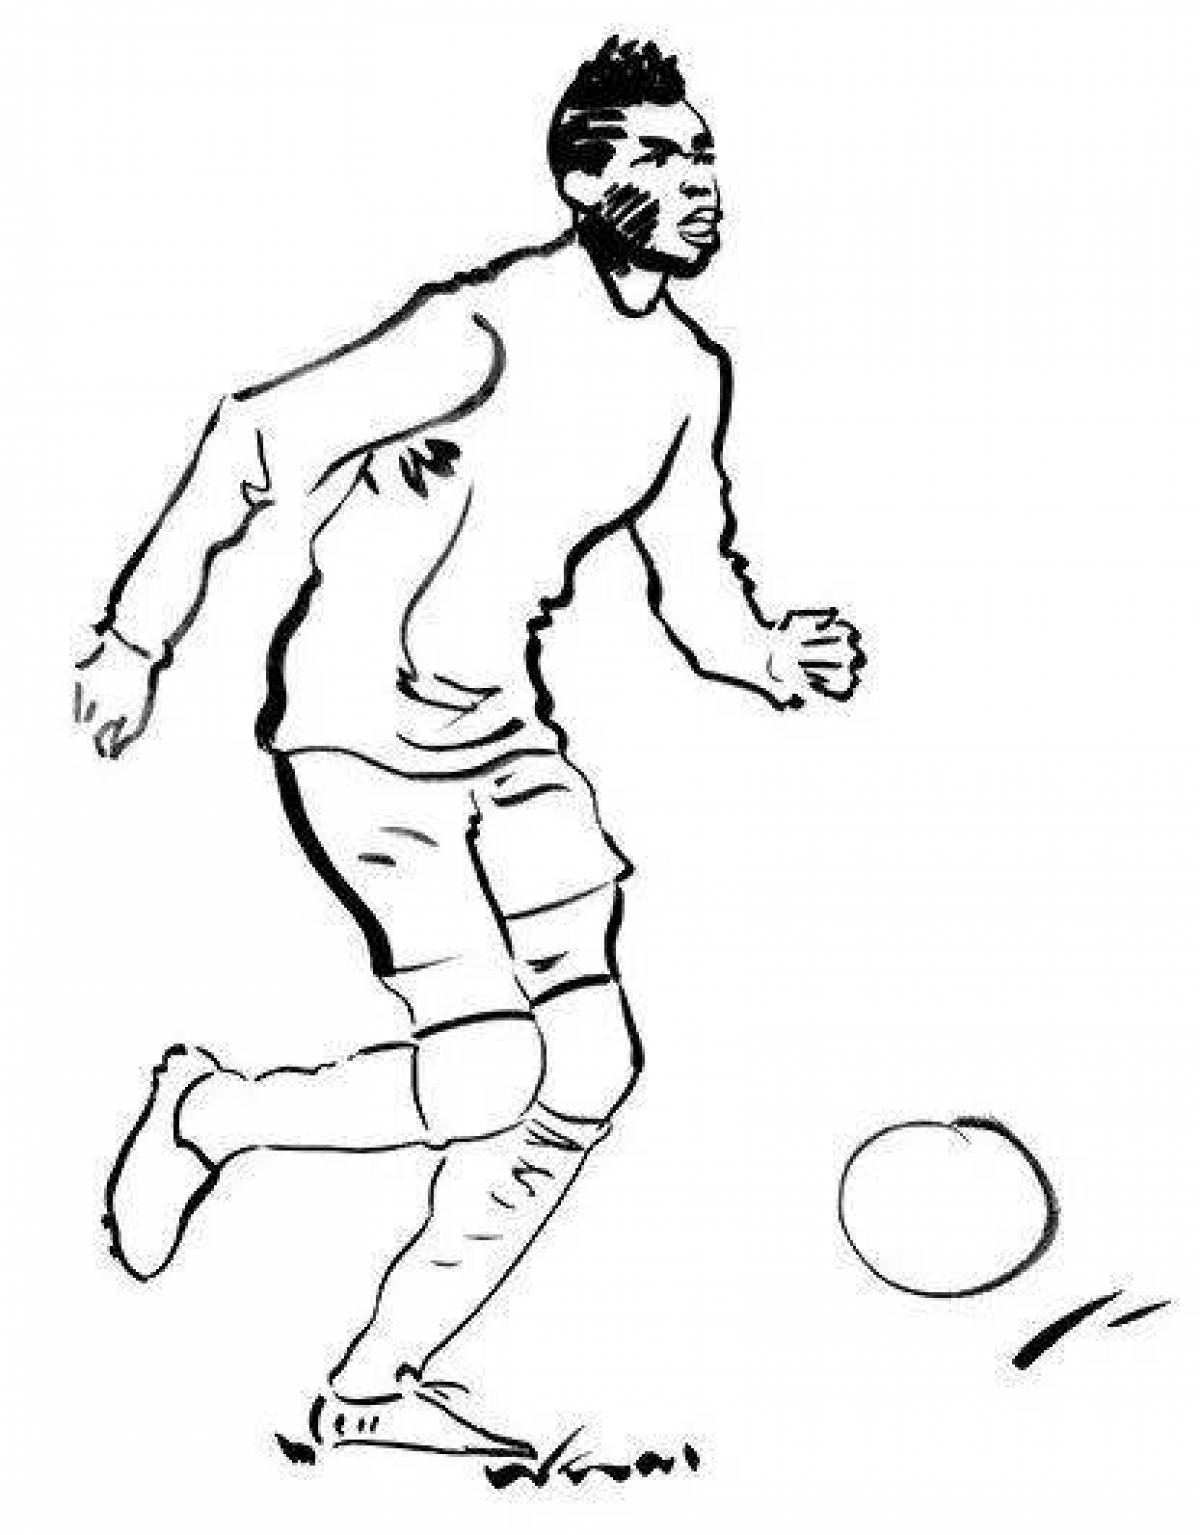 Pele's energetic football coloring page